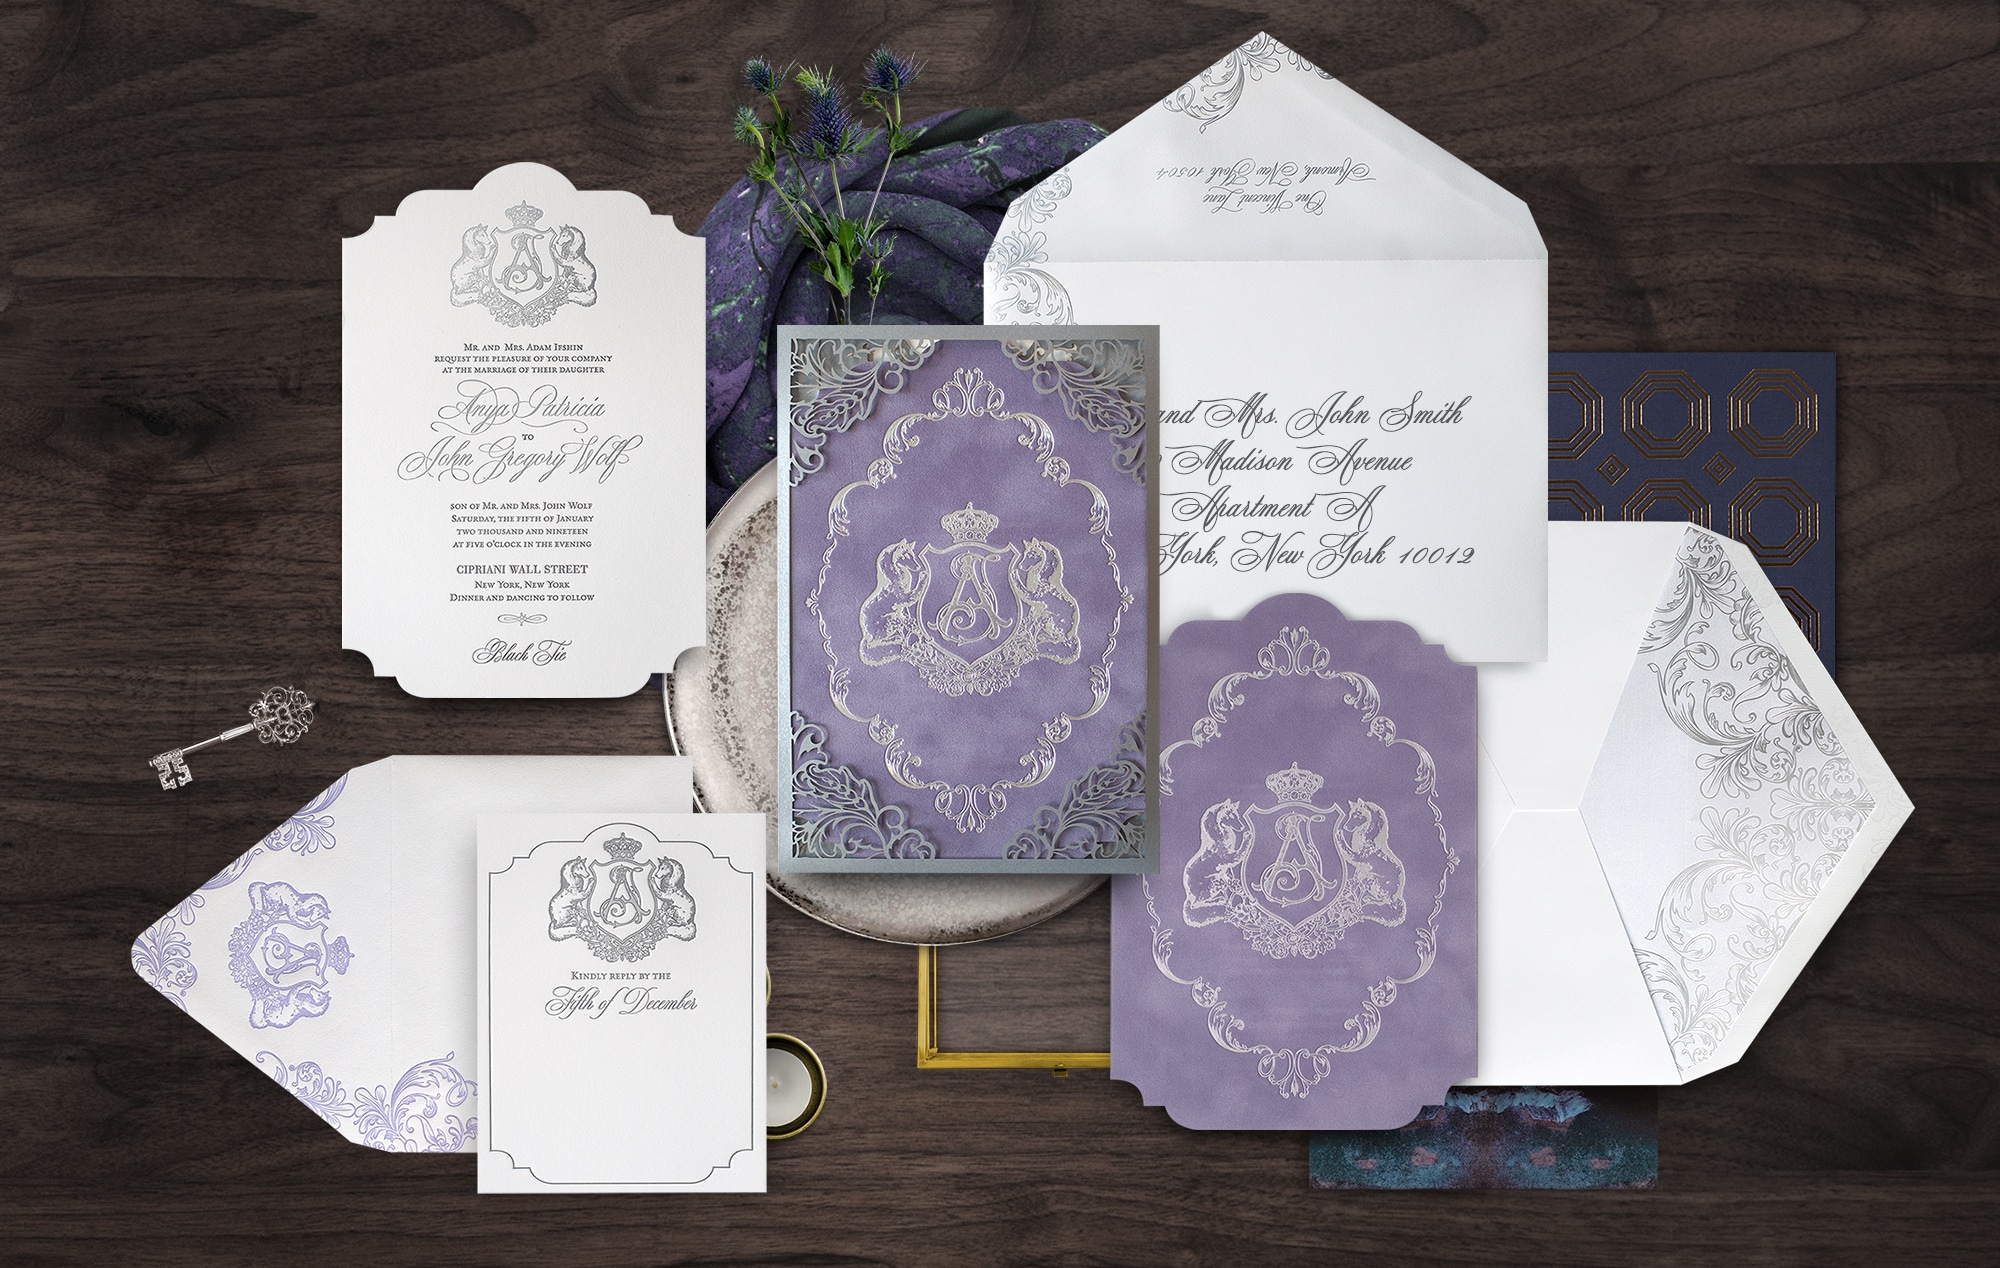 Fairytale inspired wedding invitation